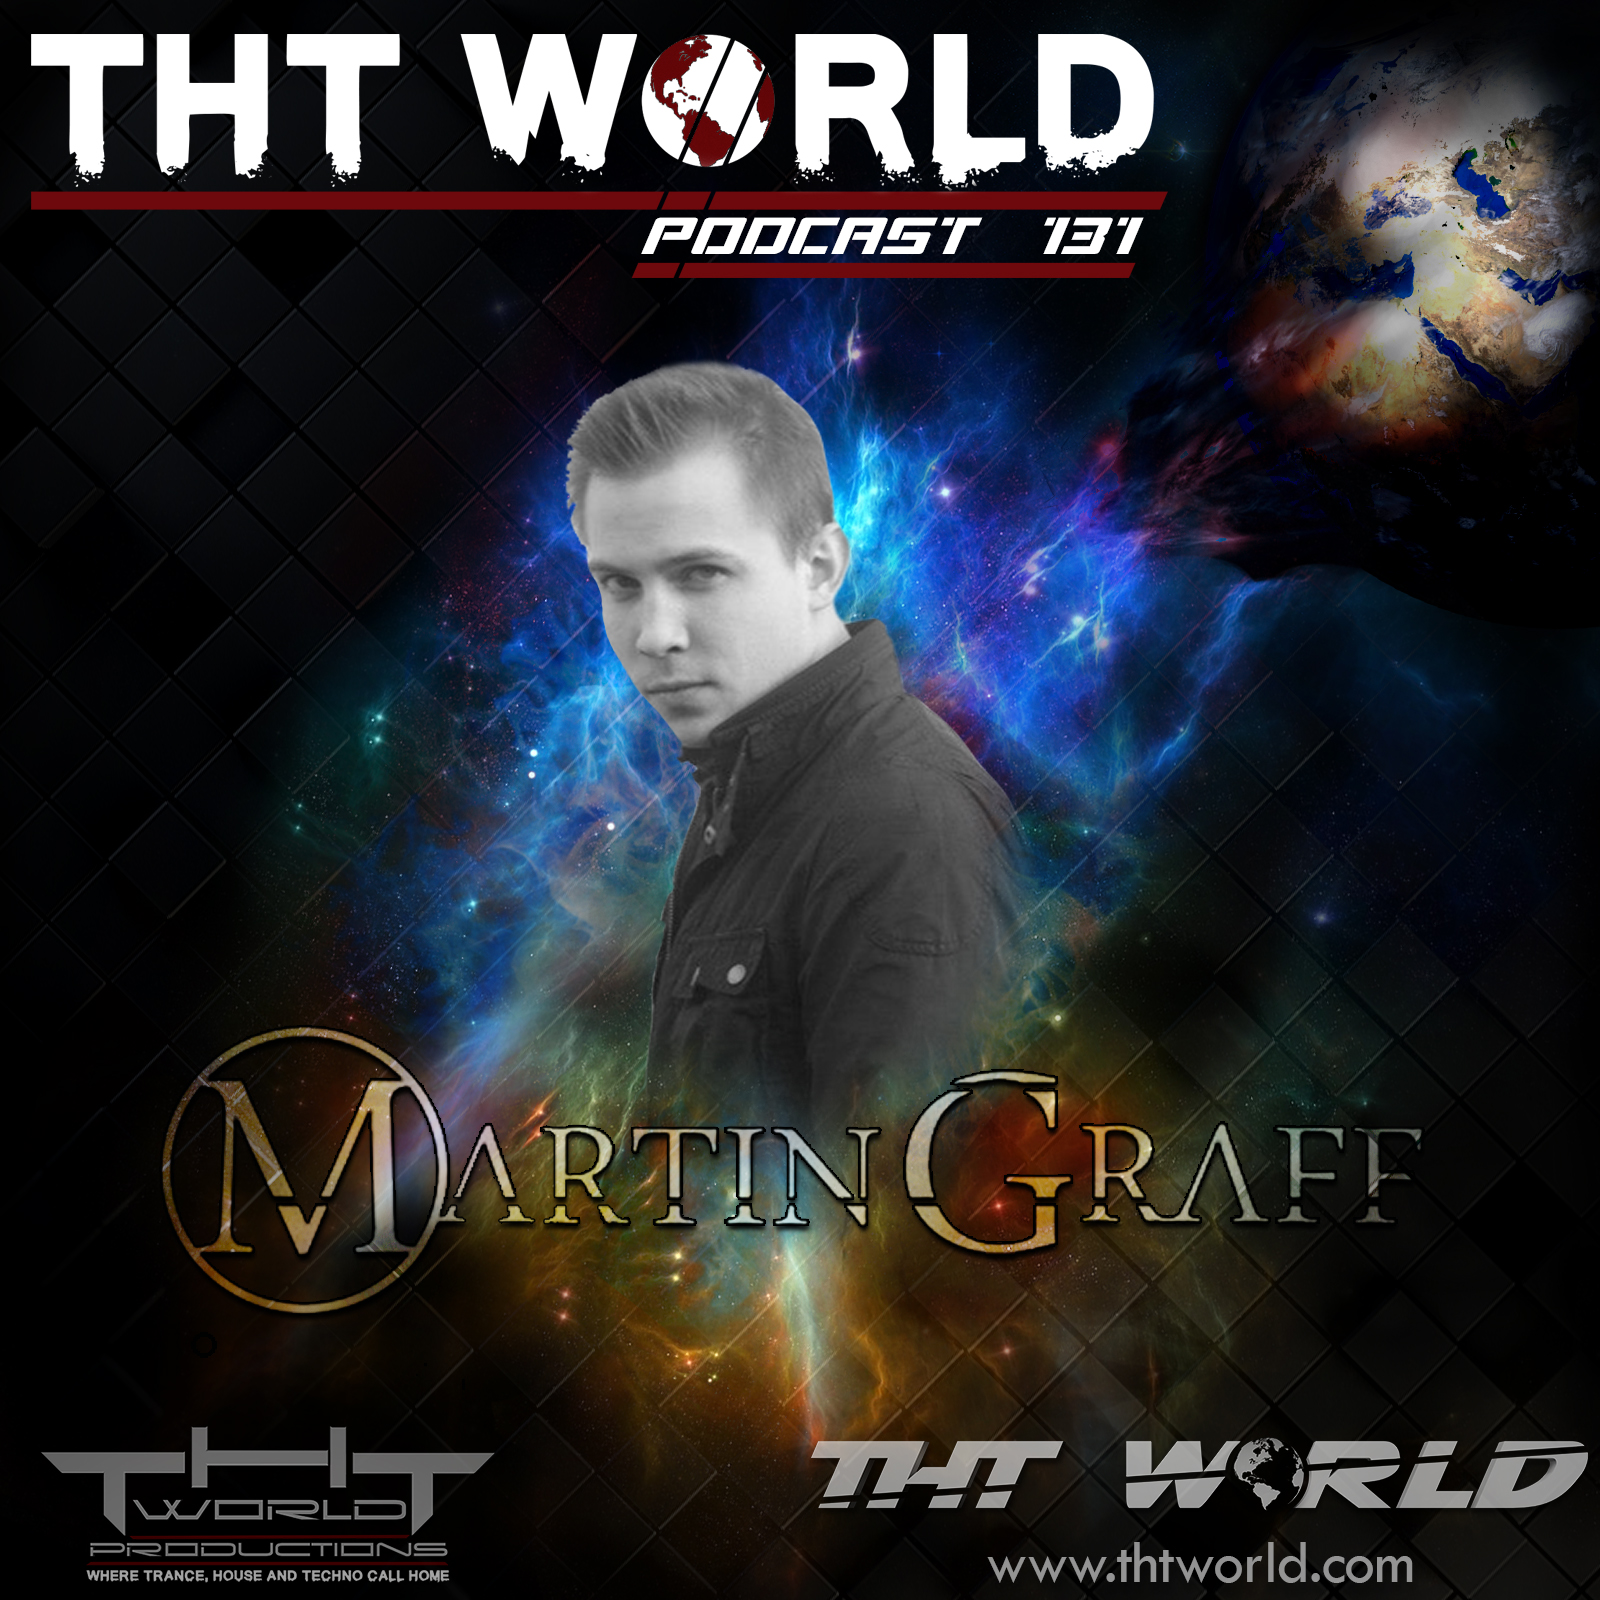 THT World Podcast 131 by Martin Graff